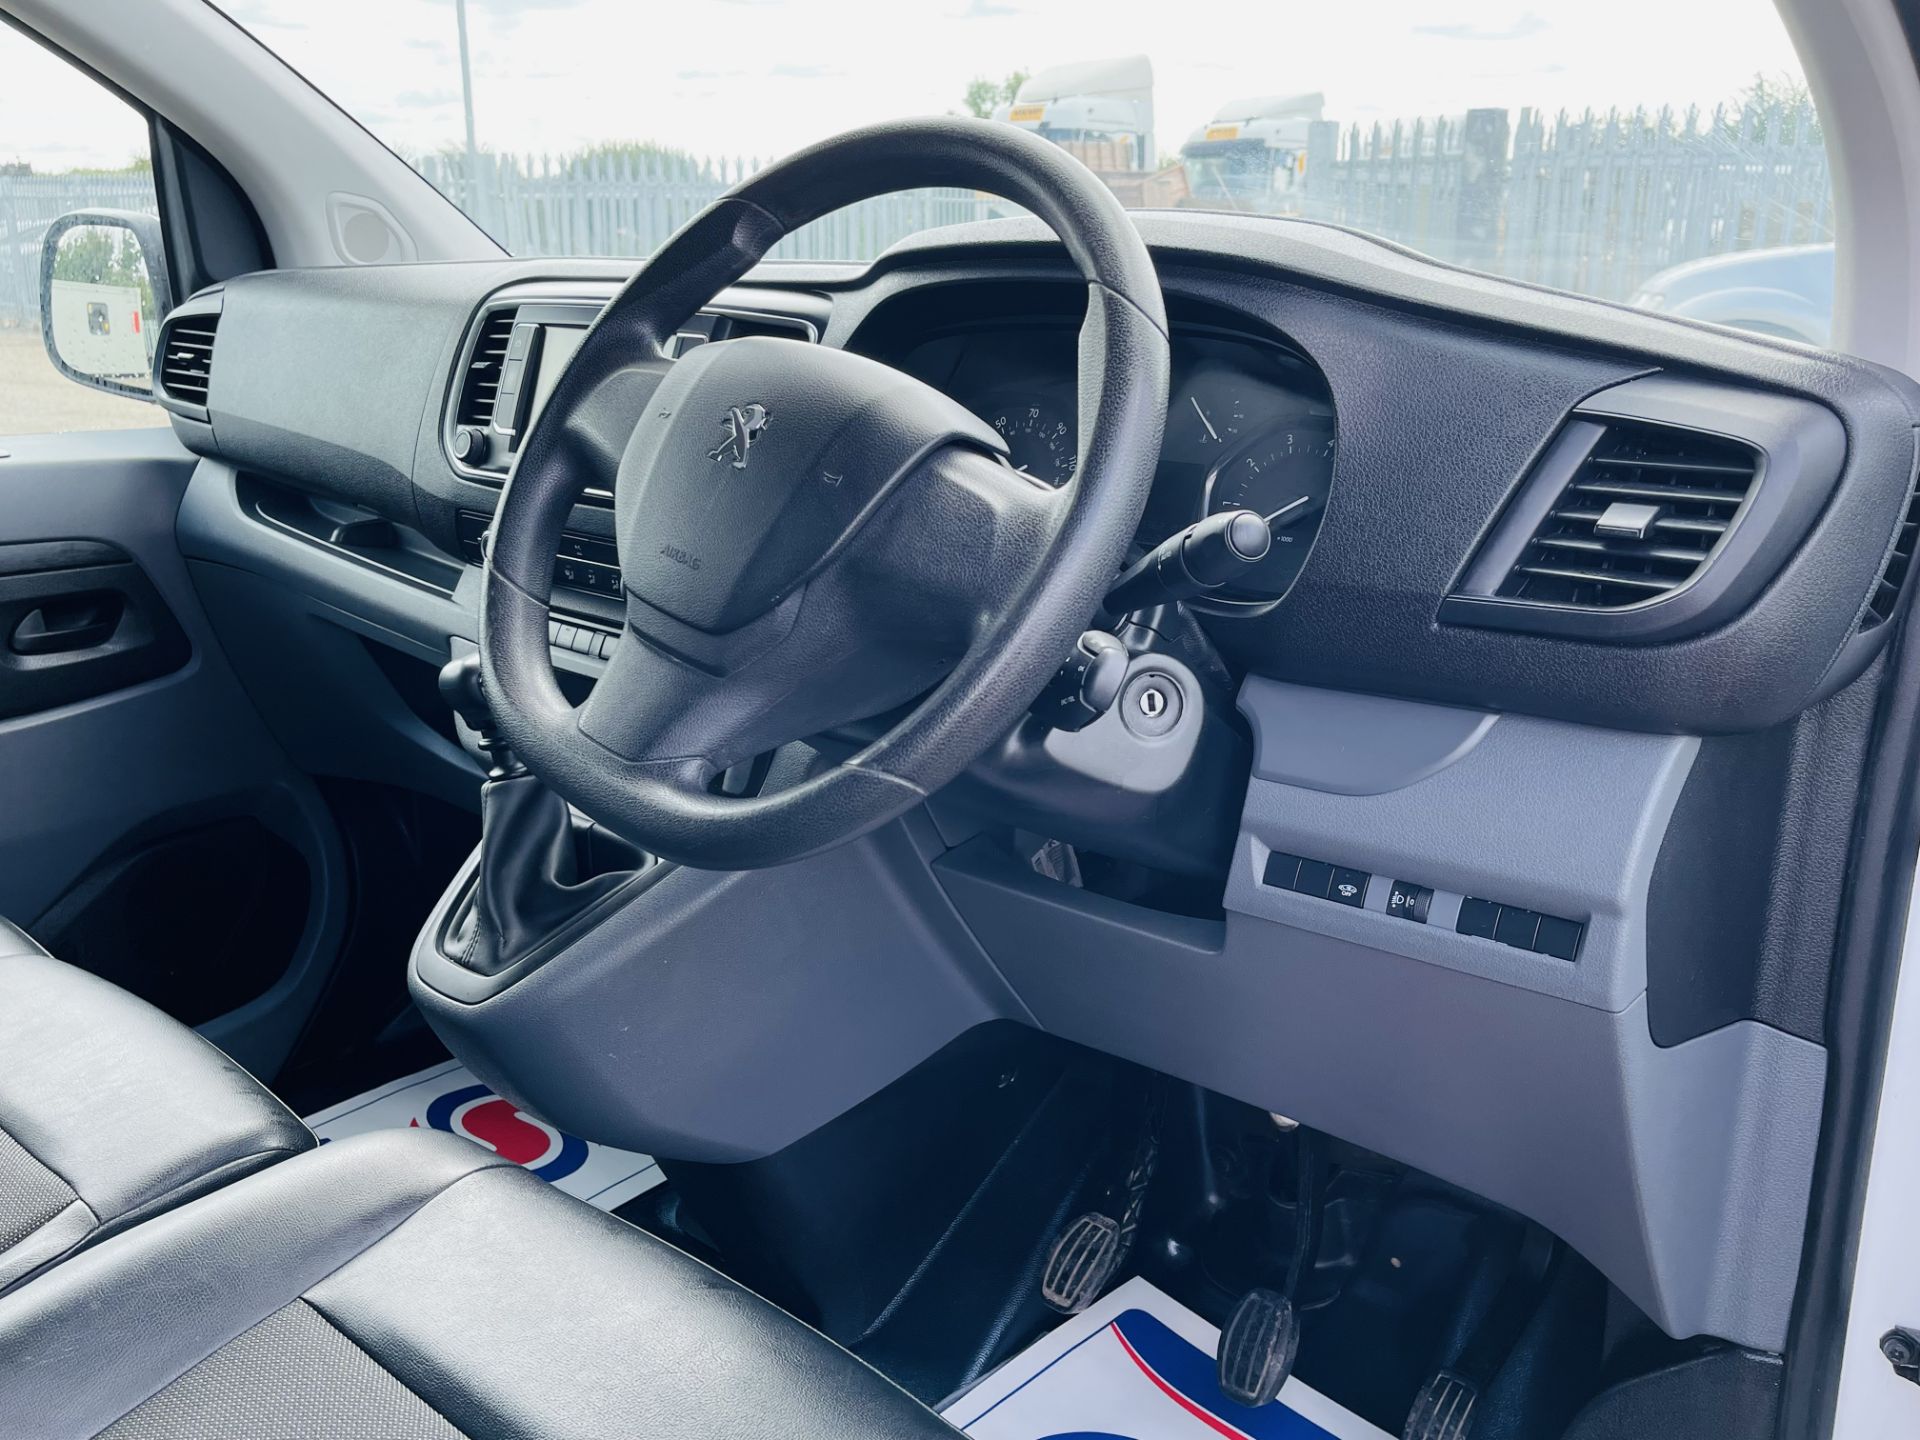 Peugeot Expert 1.6 Blue HDI Professional 2018 '18 Reg' Air con -Sat Nav-Euro 6b ** ULEZ Compliant ** - Image 17 of 21